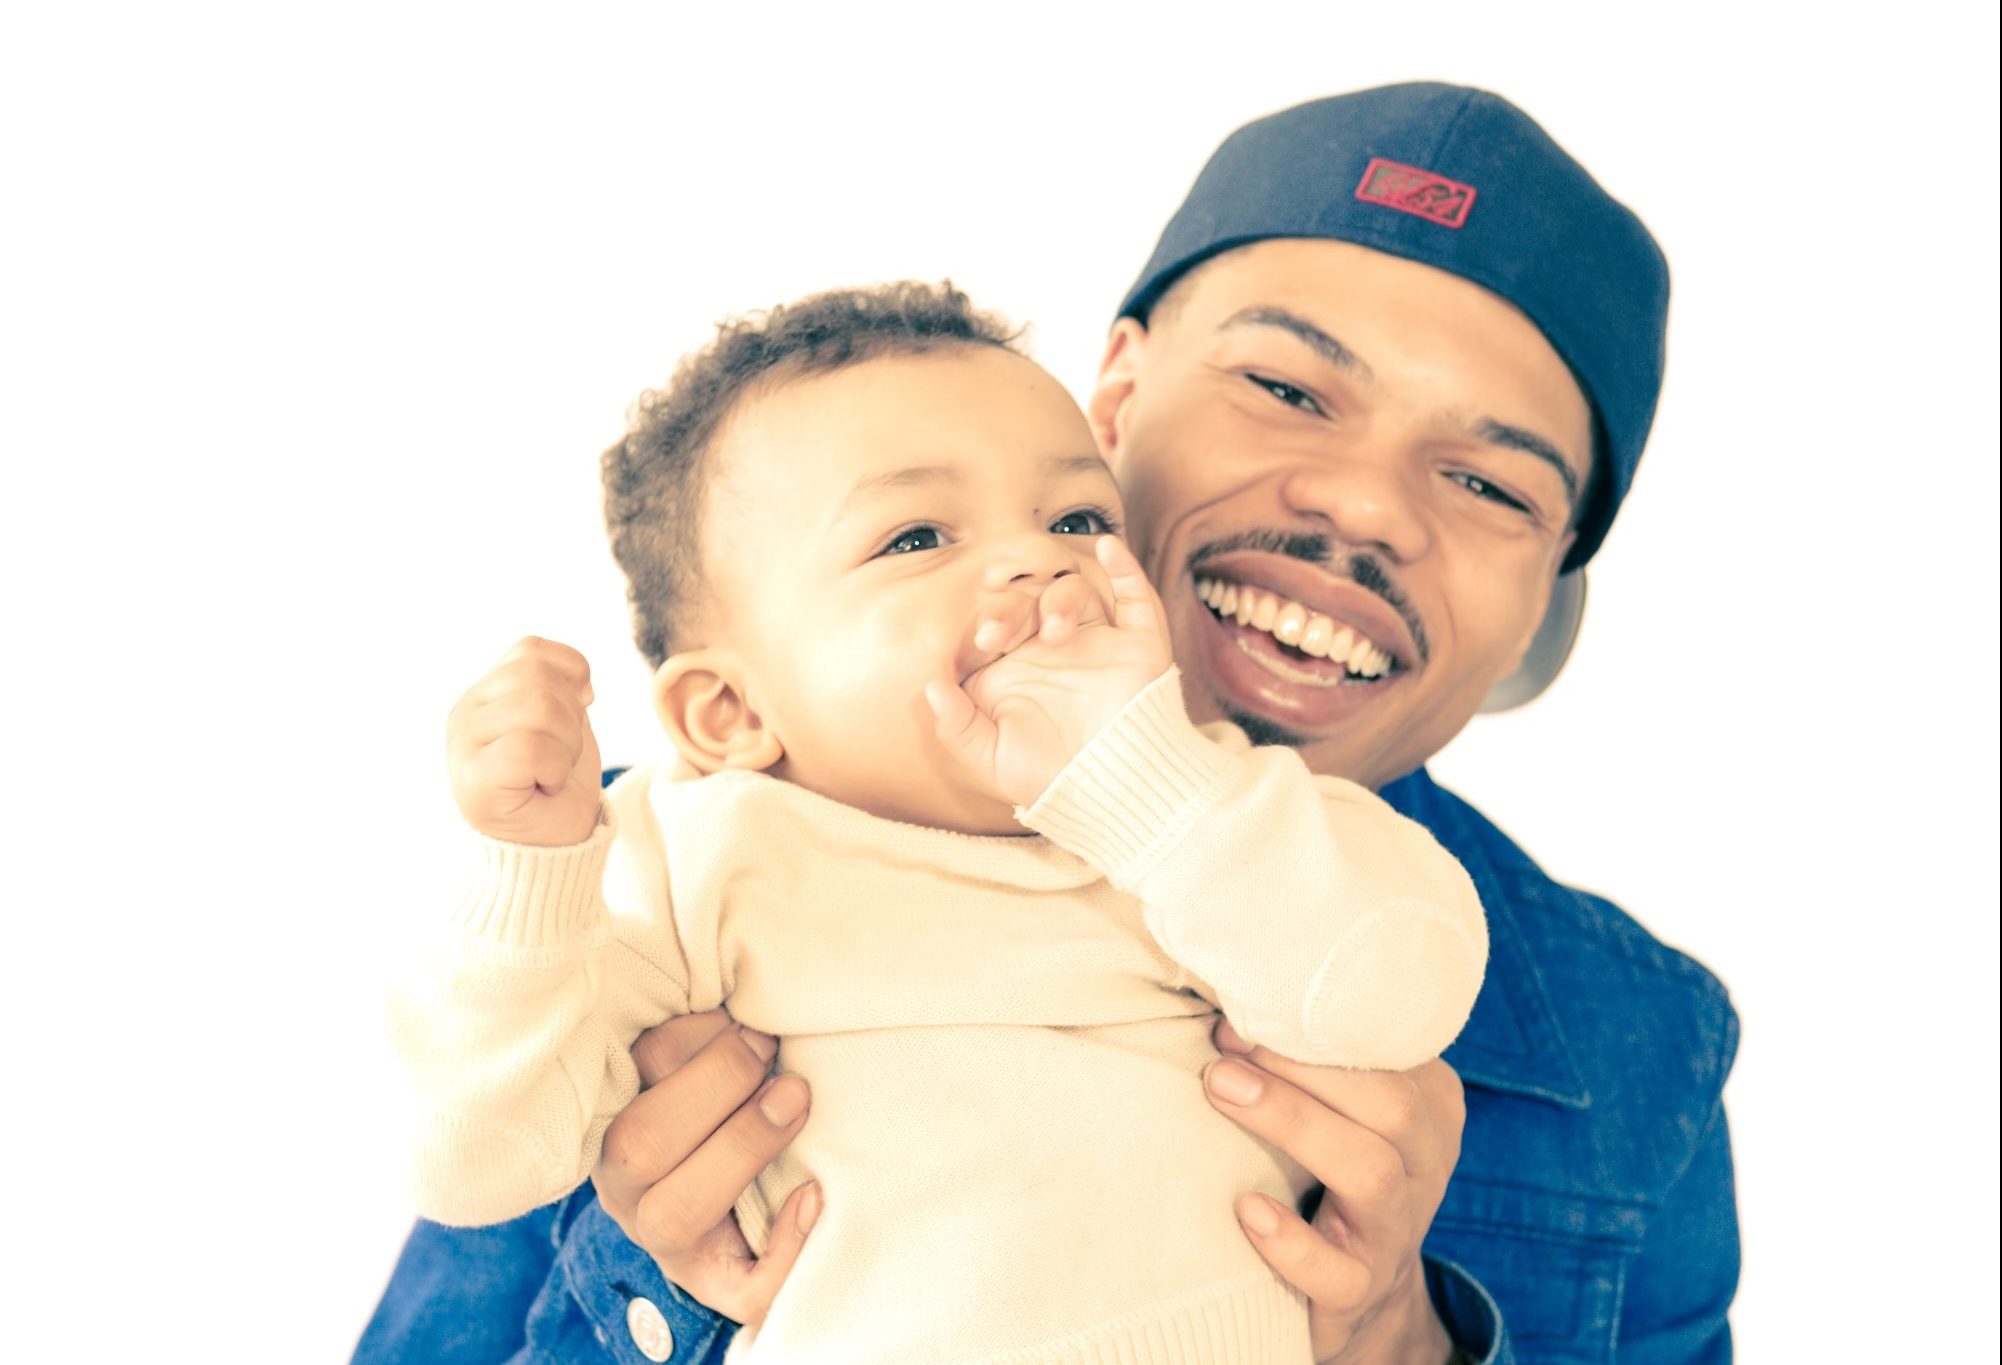 SheaMoisture Celebrates Black Dads Through the Sounds of Fatherhood